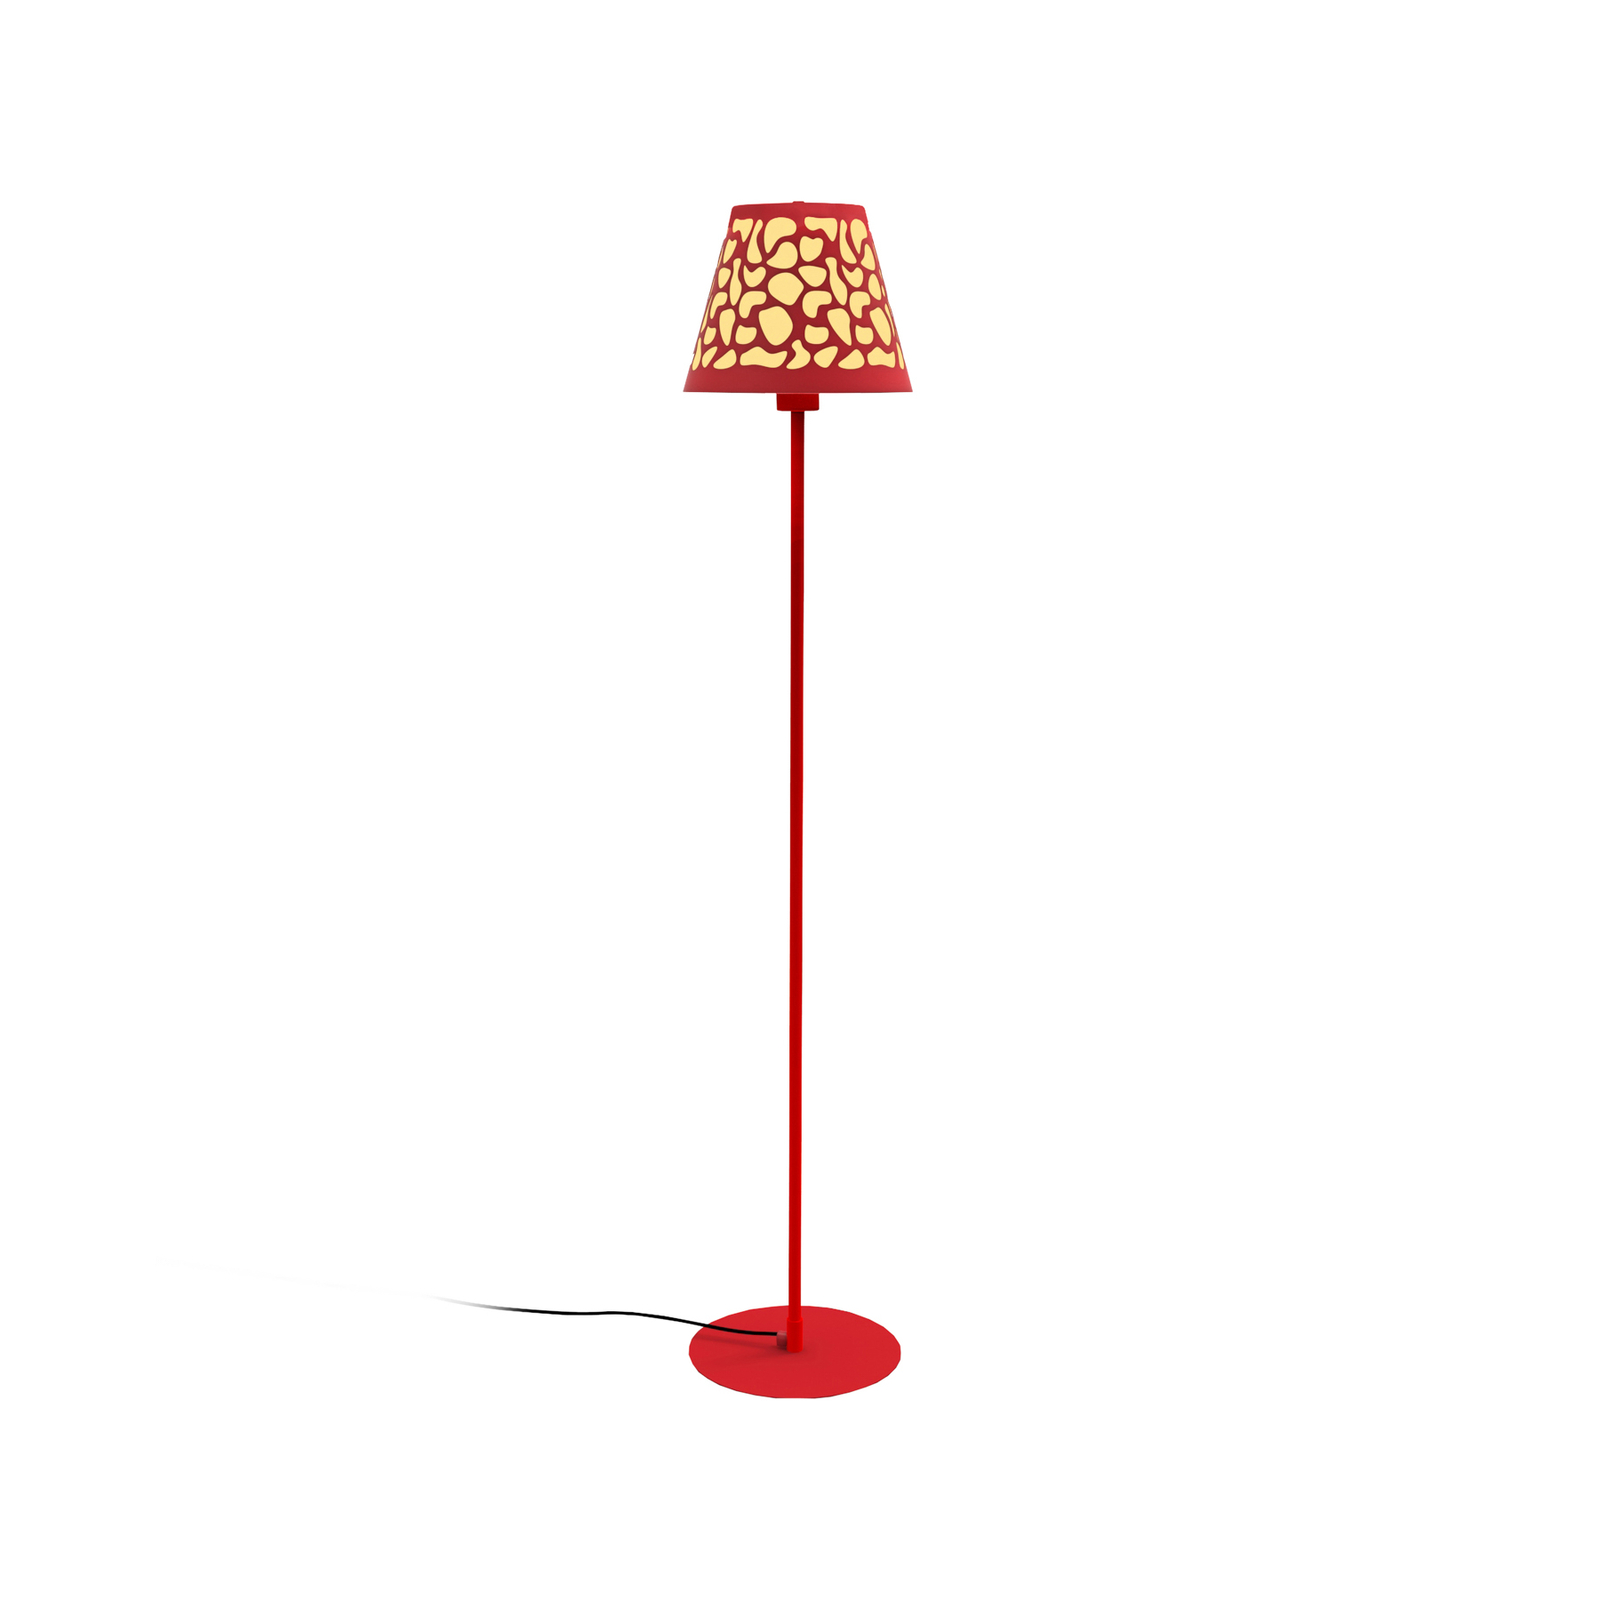 Aluminor Nihoa lampadaire motif ajouré rouge/jaune